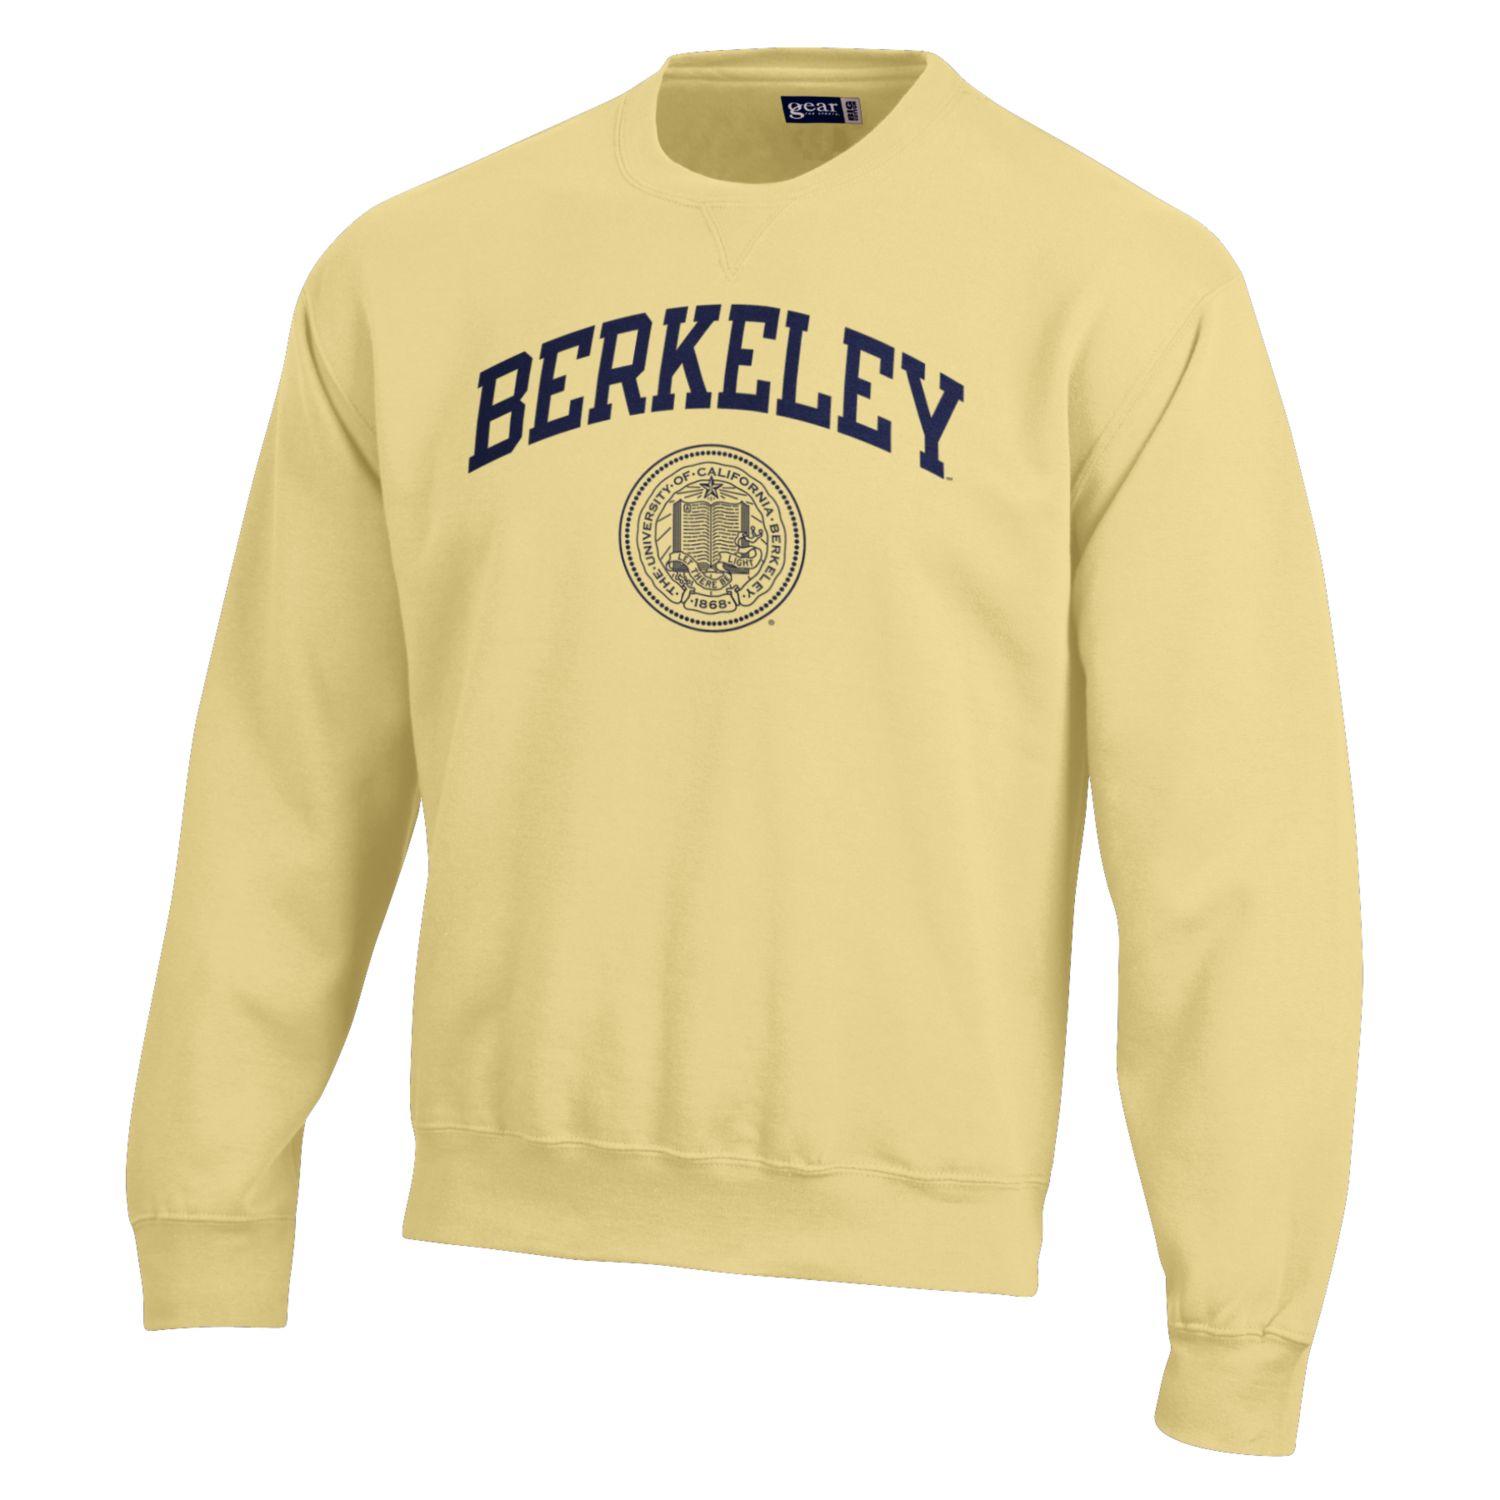 U.C. Berkeley Cal cotton rich Gear For sports crew-neck sweatshirt-Butter-Shop College Wear